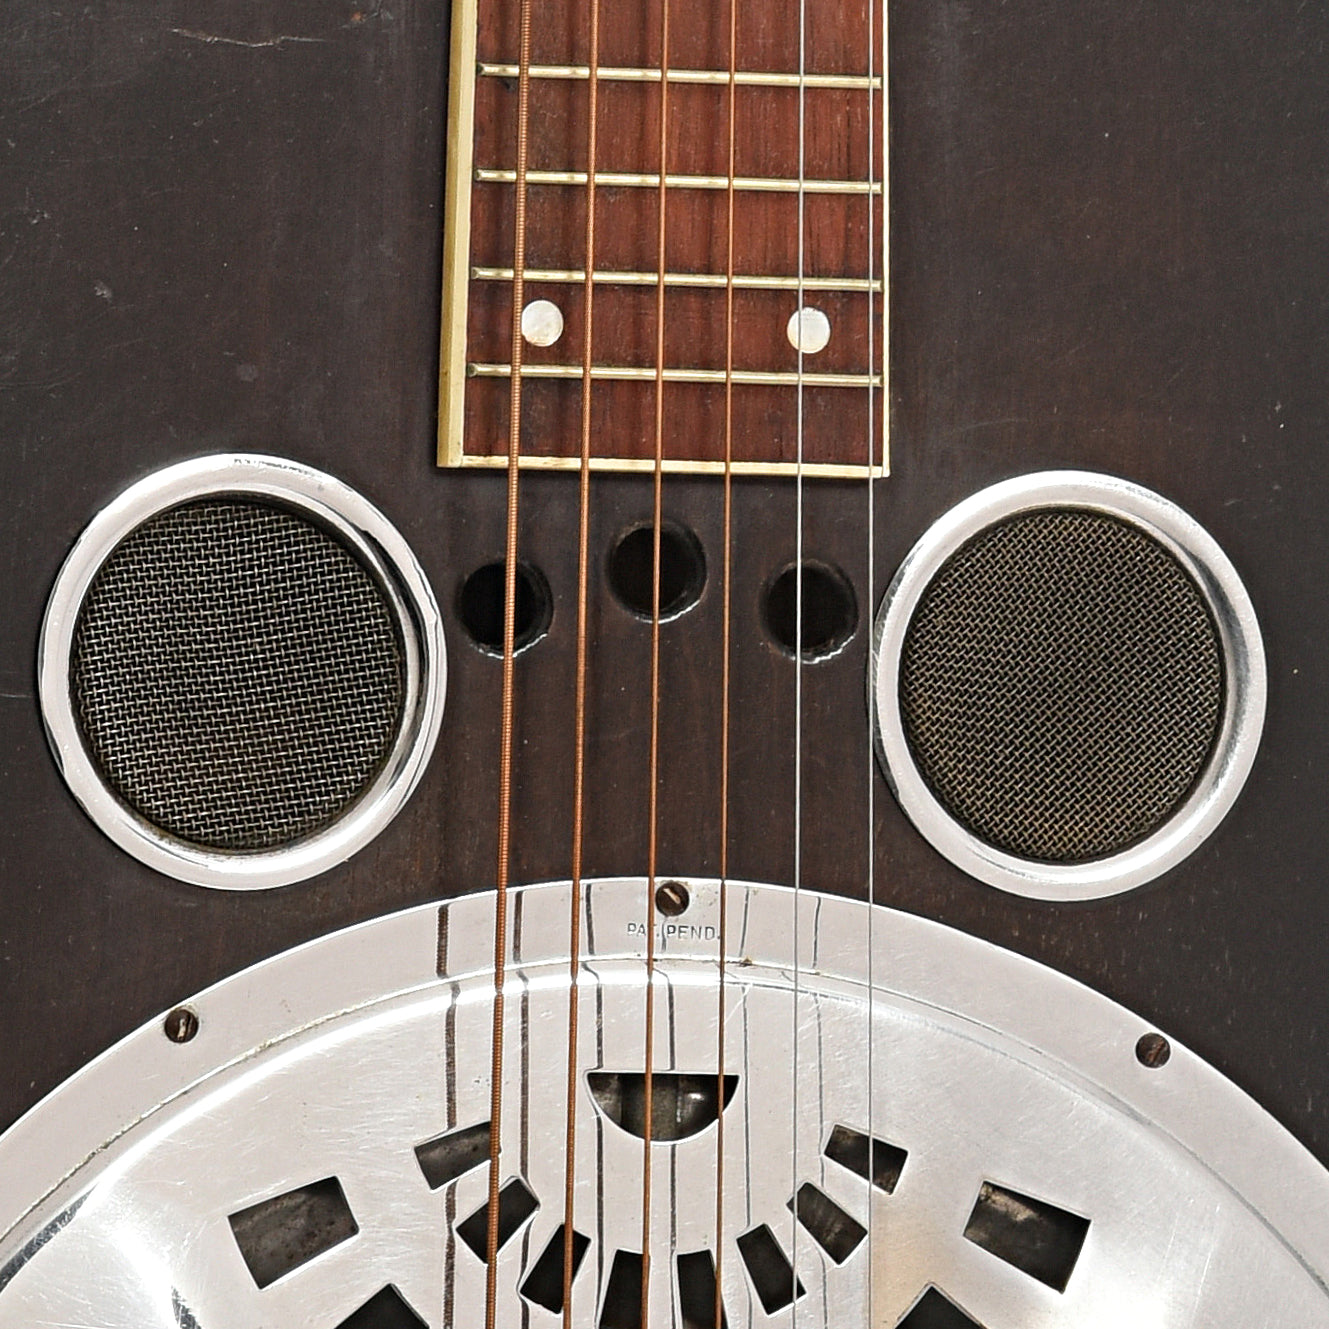 Sound of holes of Dobro Model 55 Resonator Guitar